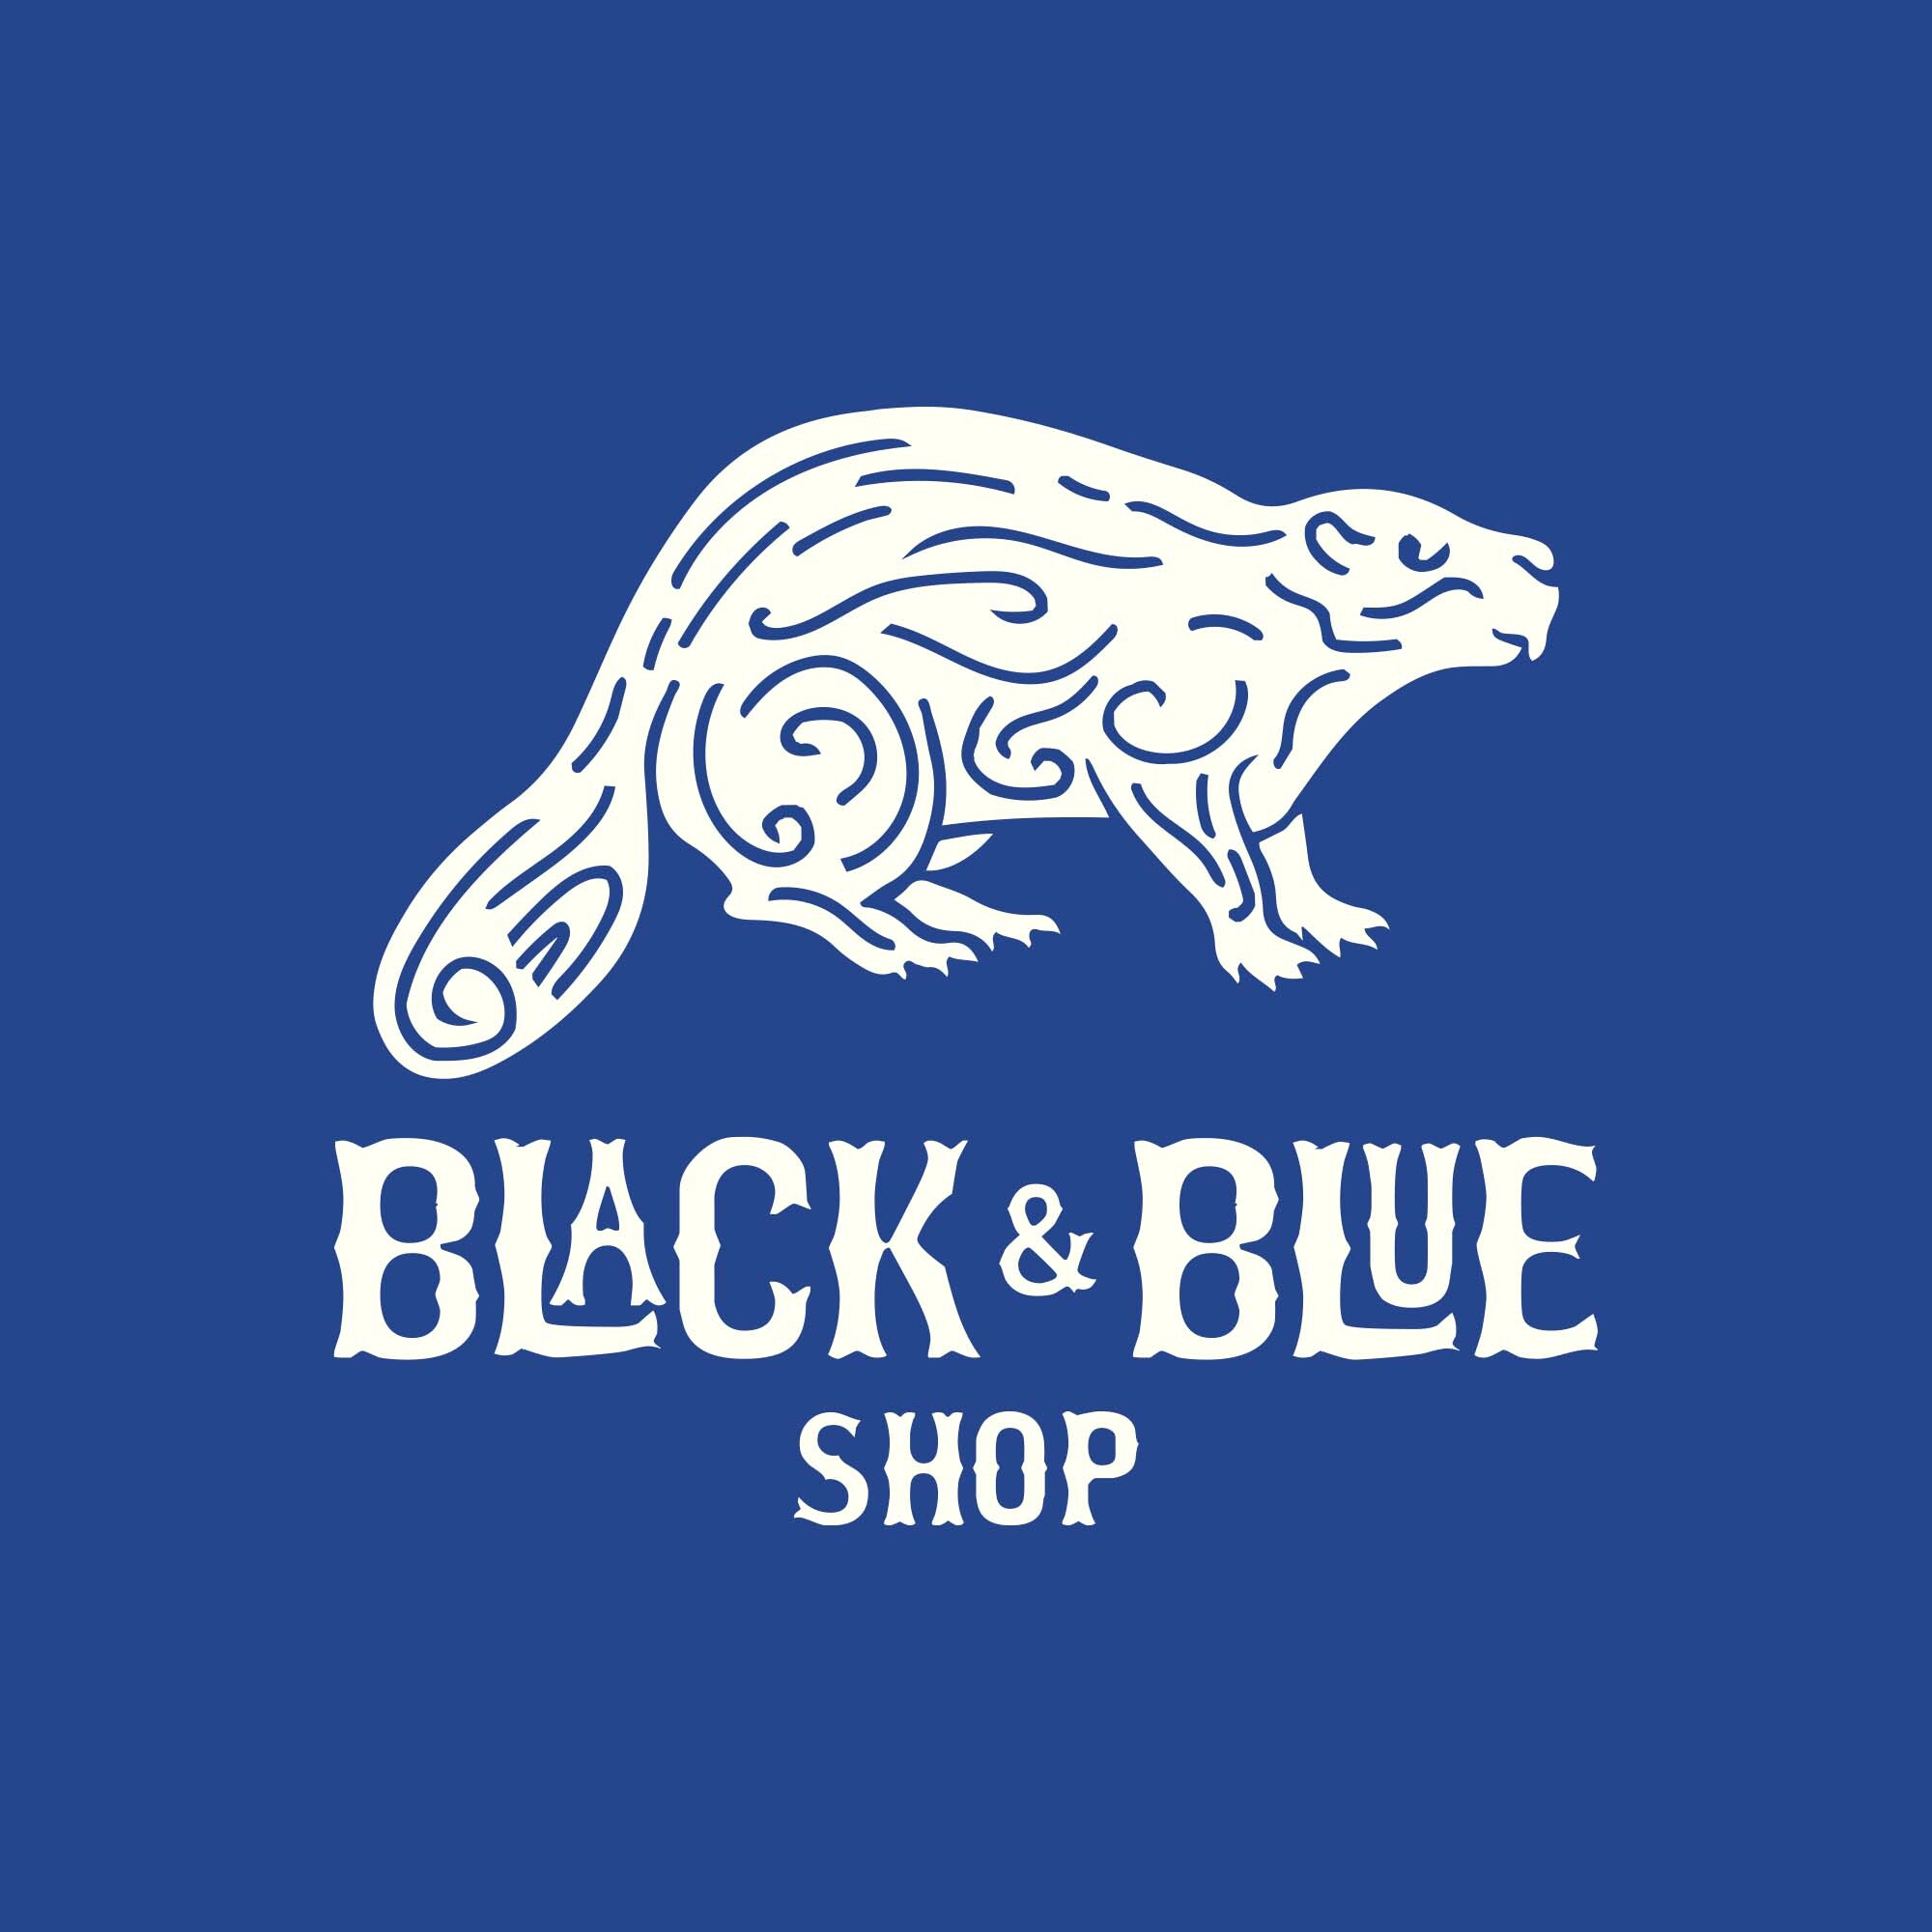 Black & Blue Shop - Logo